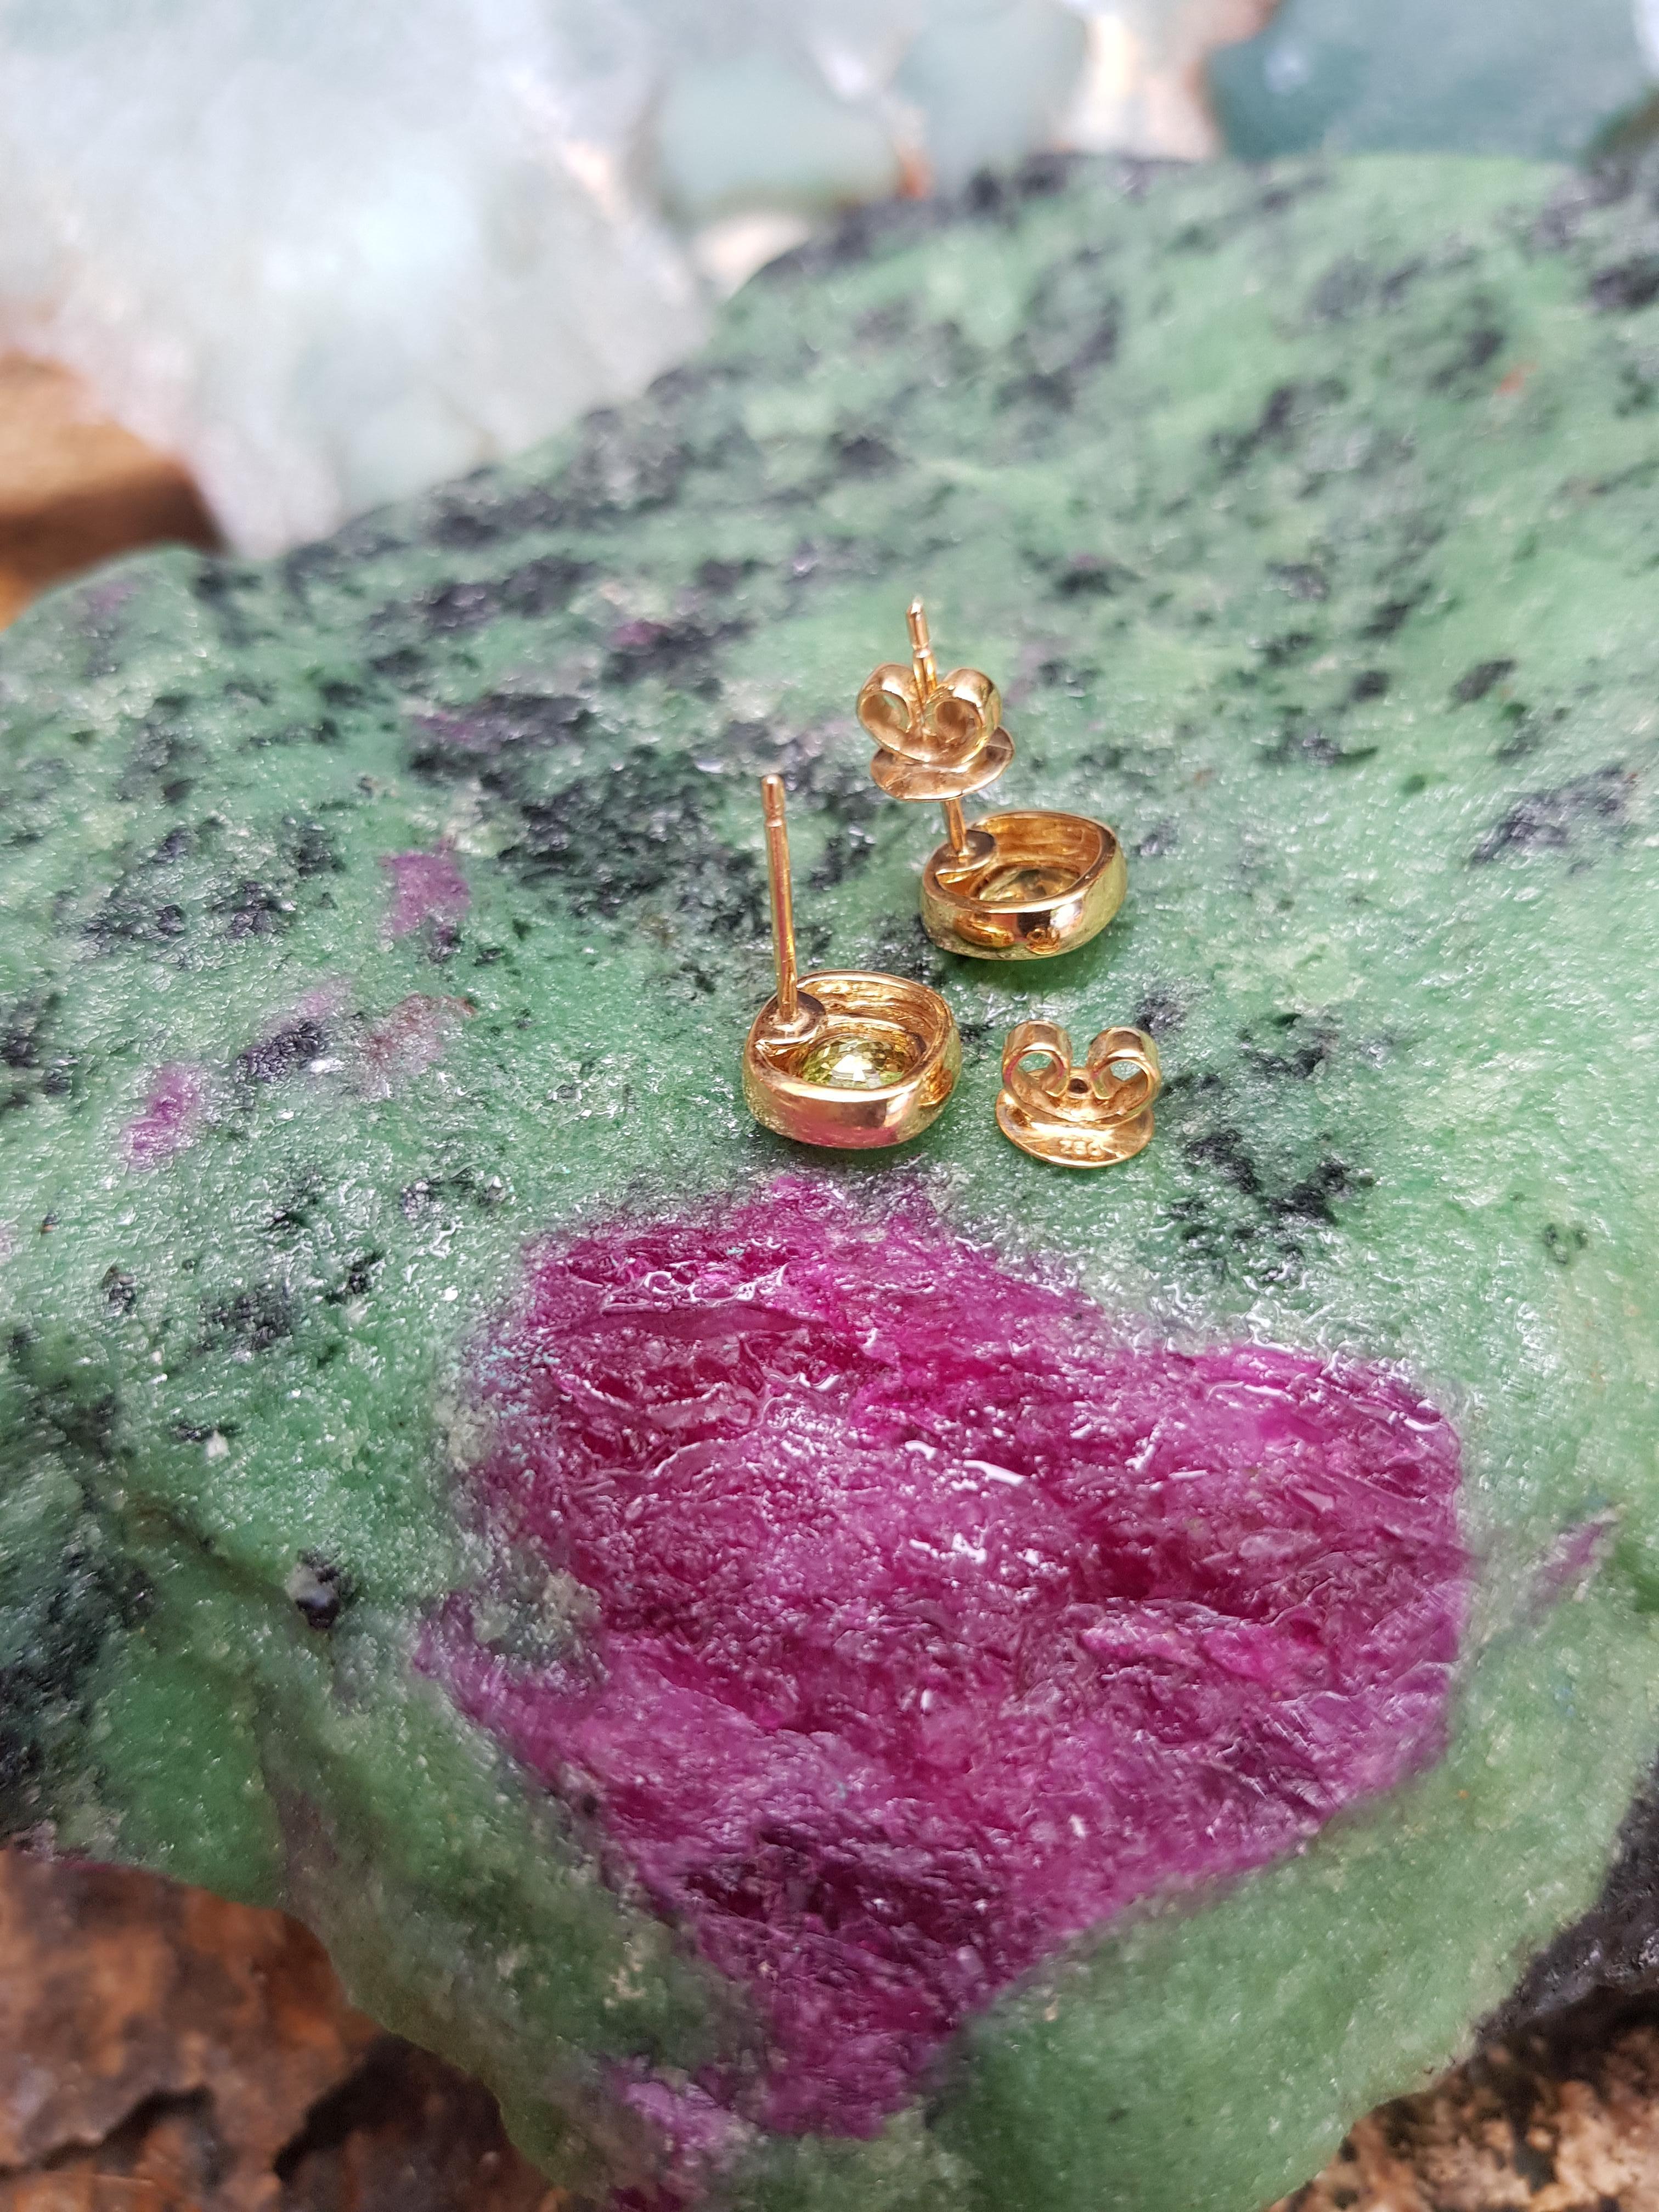 Yellow Sapphire Earrings Set in 18 Karat Gold Settings For Sale 1